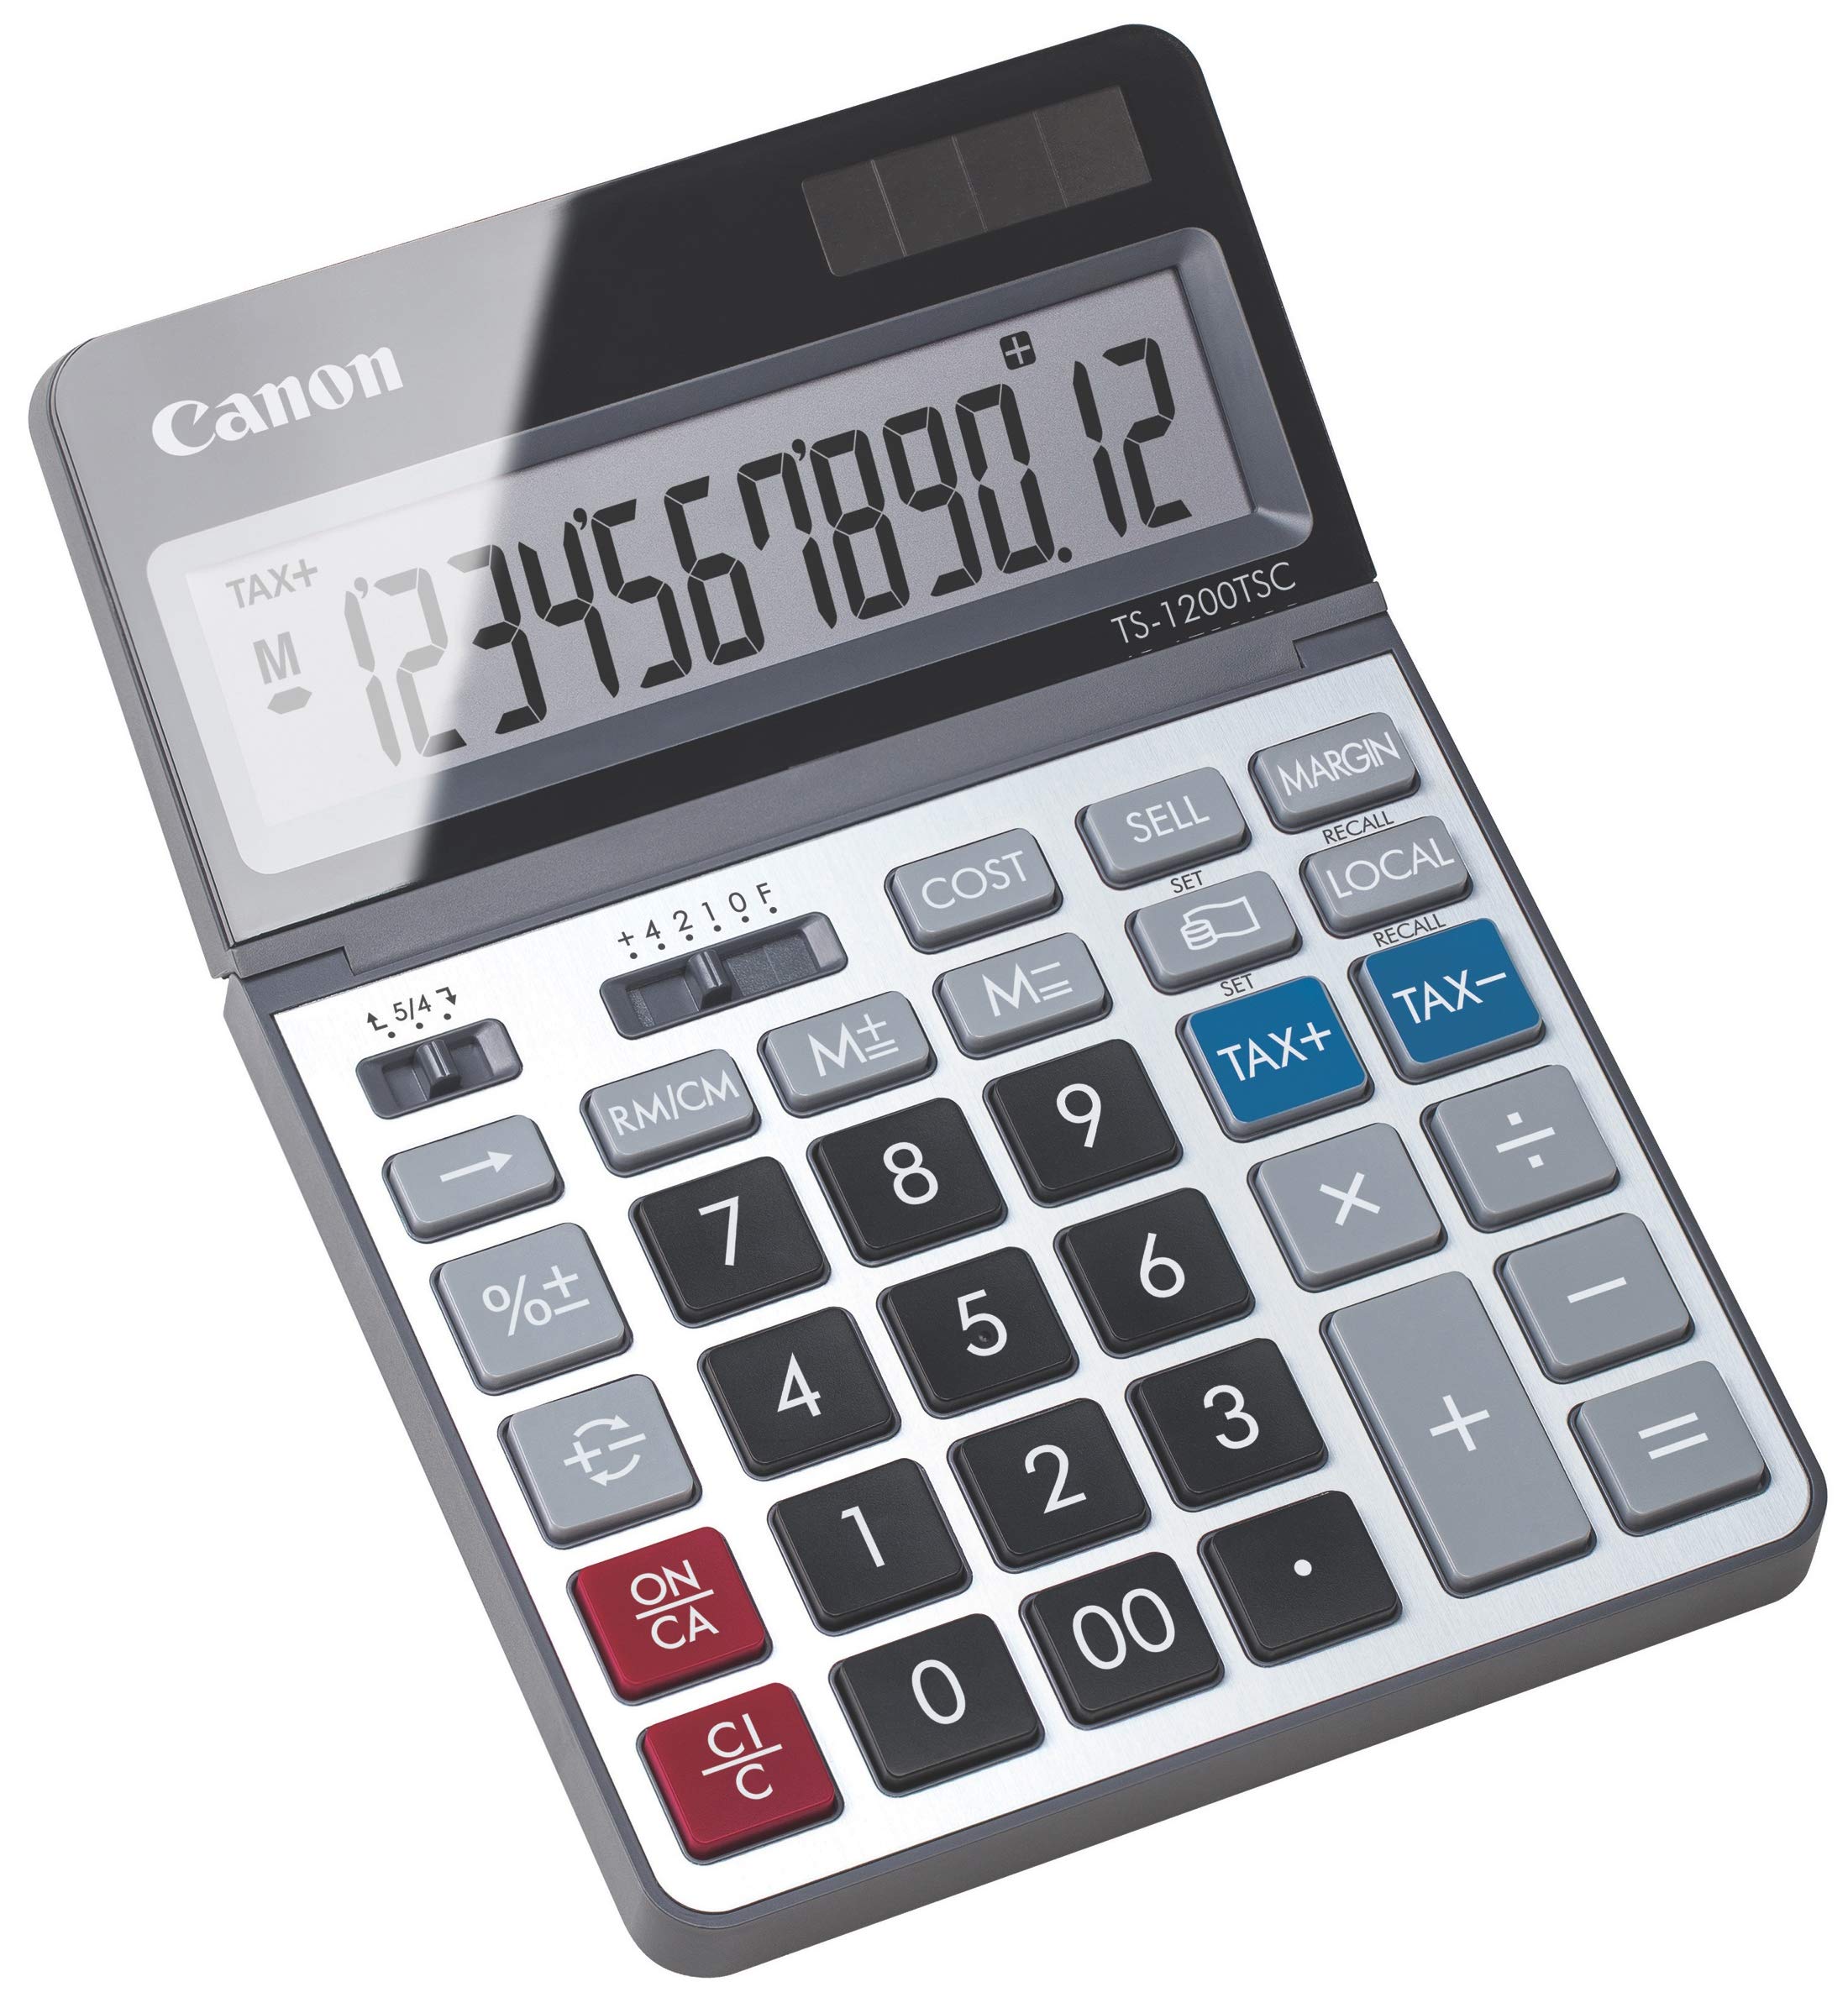 Canon USA 2468C001 Canon TS-1200TSC Desktop Calculator with LCD Display